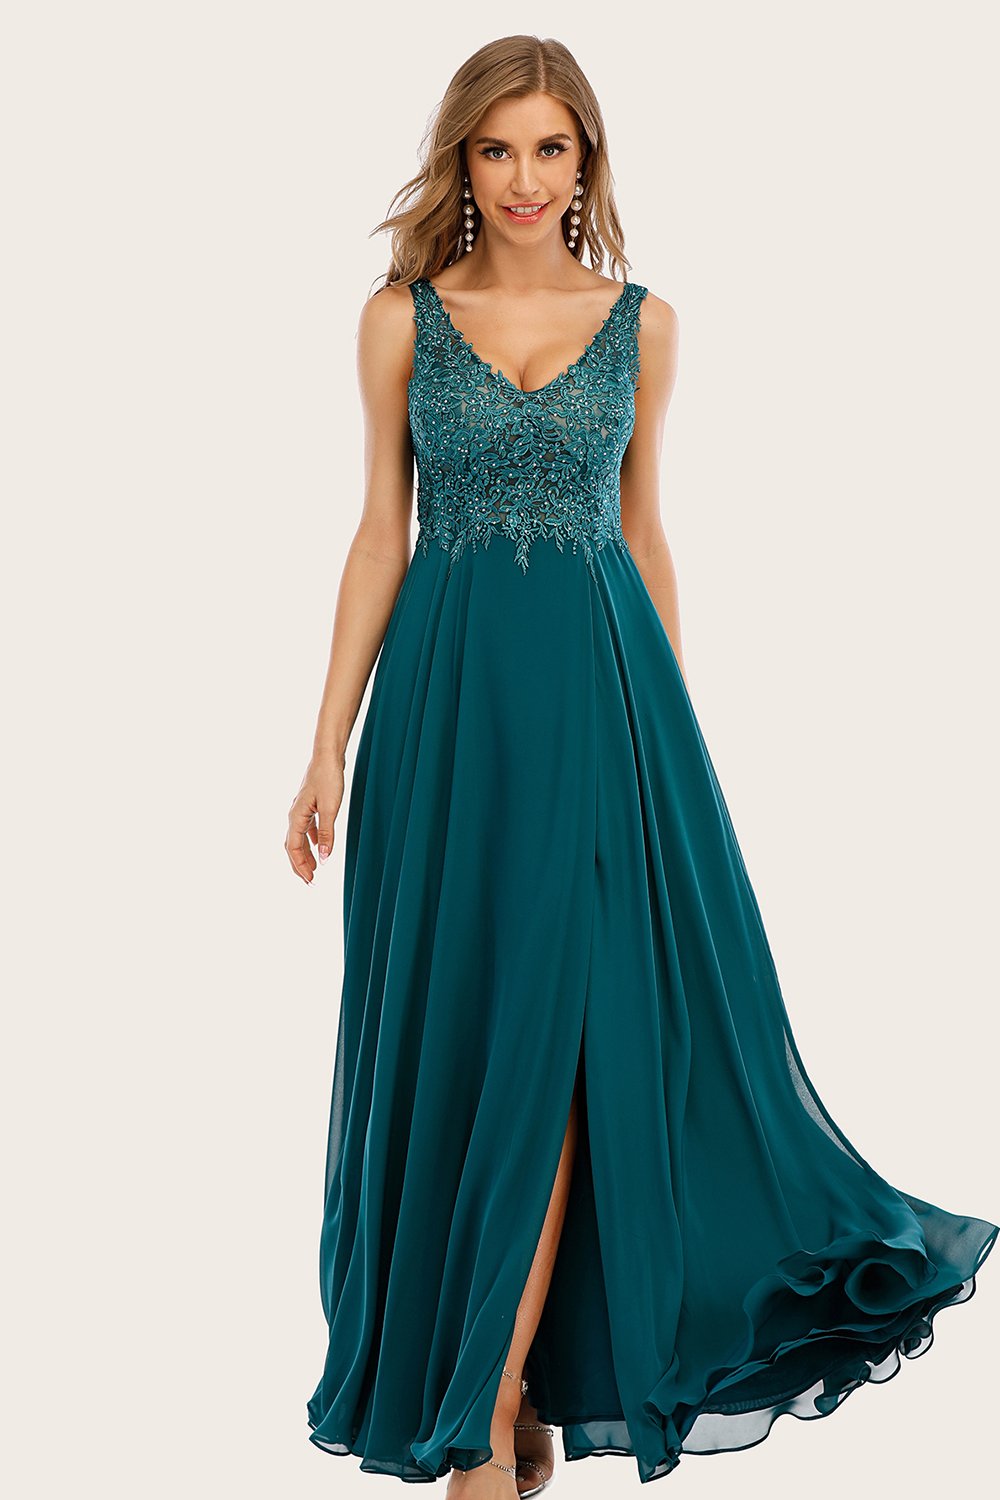 Turquoise Chiffon Long Ball Dress with Beading